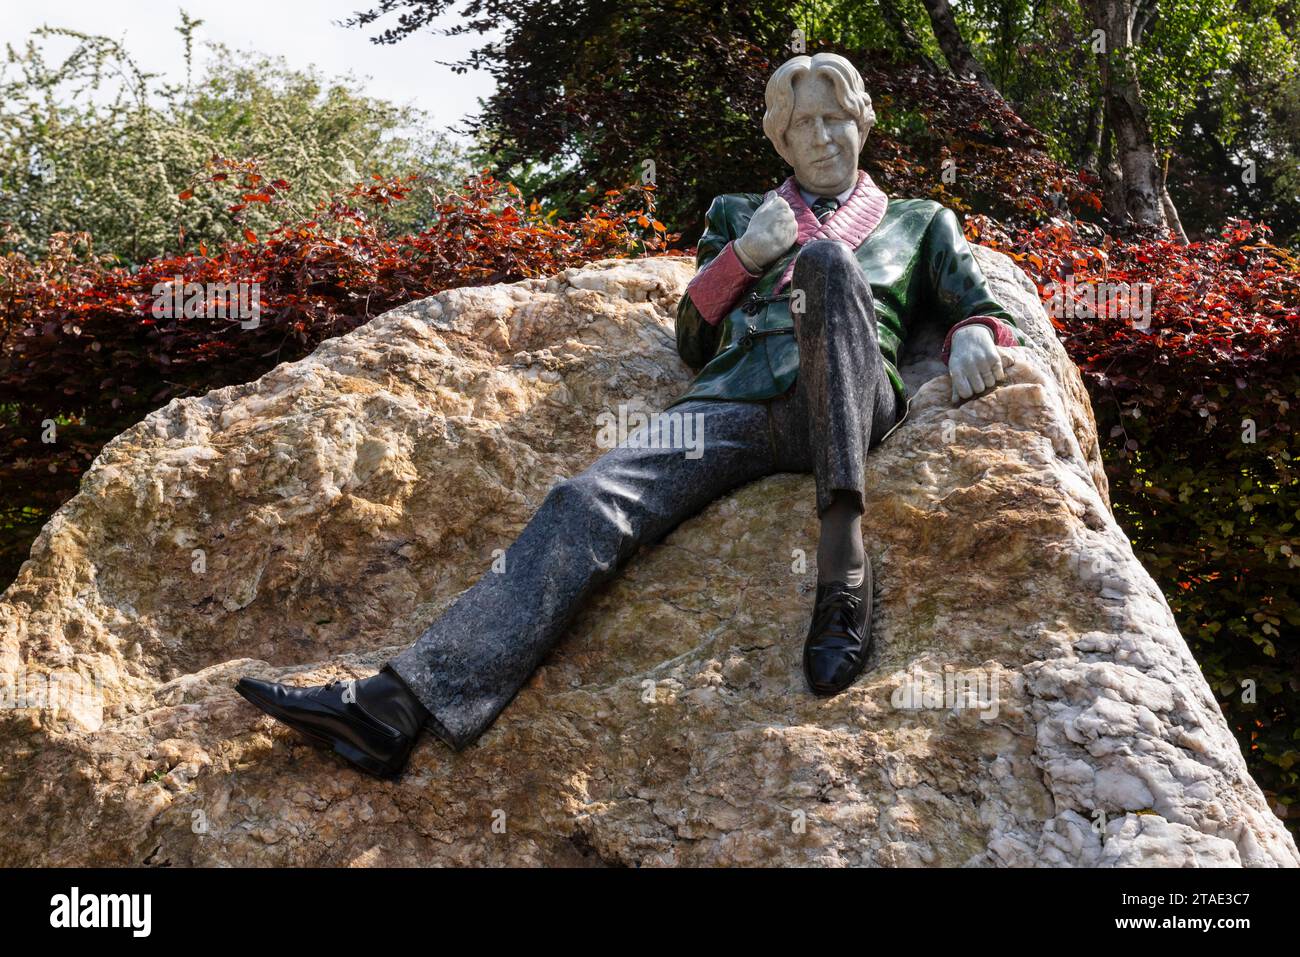 Republic of Ireland, County Dublin, Dublin, Merrion Square Park, sculpture by Dany Osborne representing Oscar Wilde Stock Photo